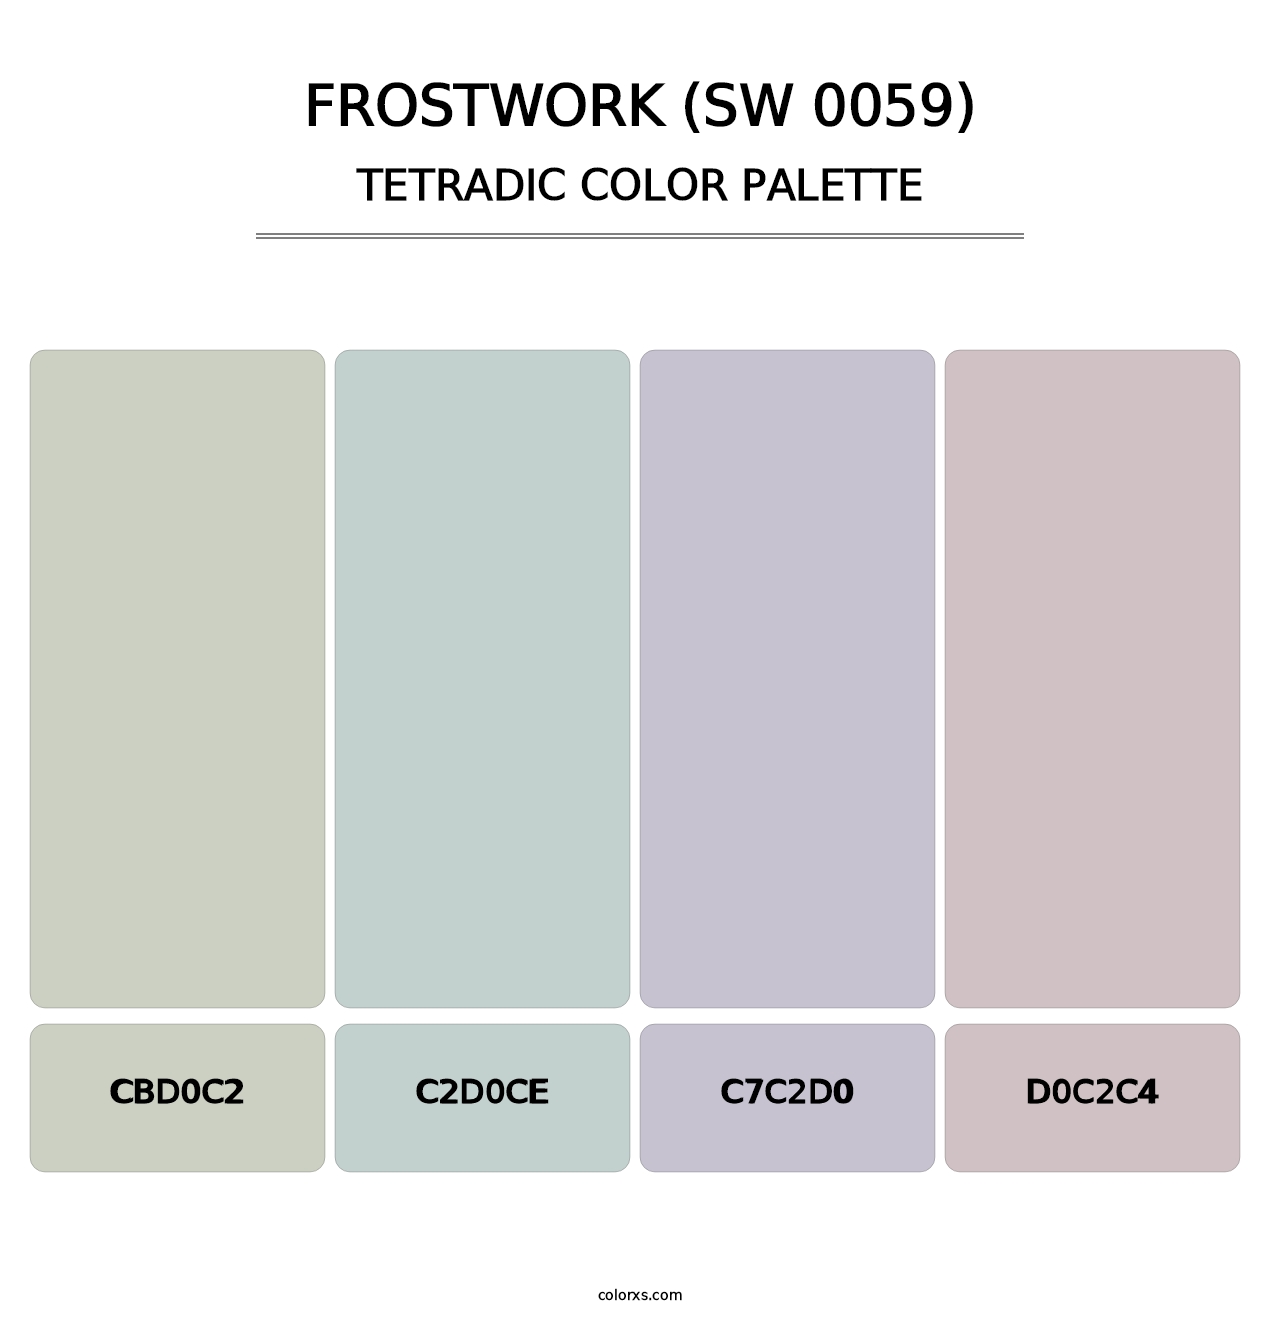 Frostwork (SW 0059) - Tetradic Color Palette